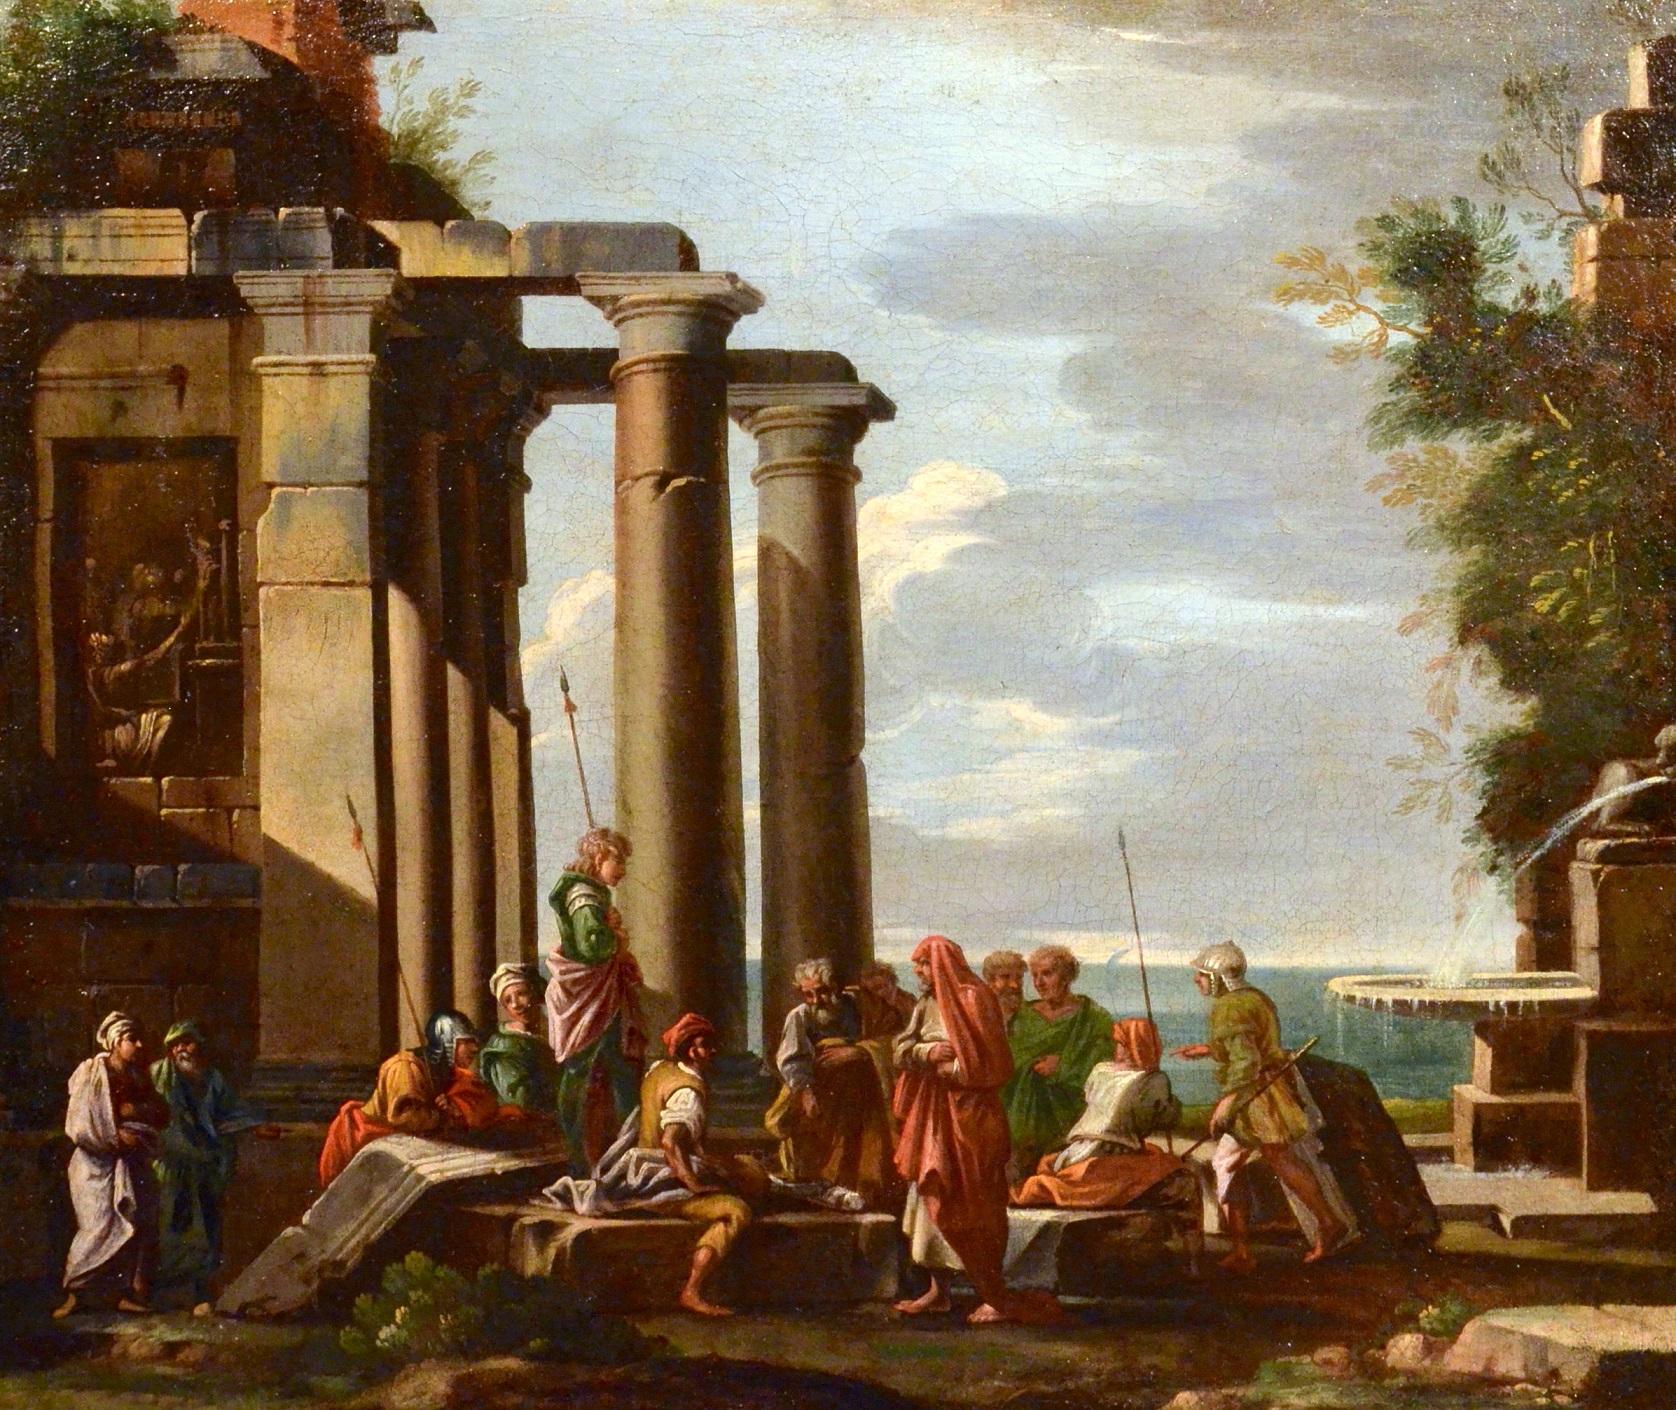 Giovanni Ghisolfi (Milan 1623 - 1683) Landscape Painting – Ghisolfi Gemälde Öl auf Leinwand, alter Meister, 17. Jahrhundert, architektonische Capriccio-Kunst